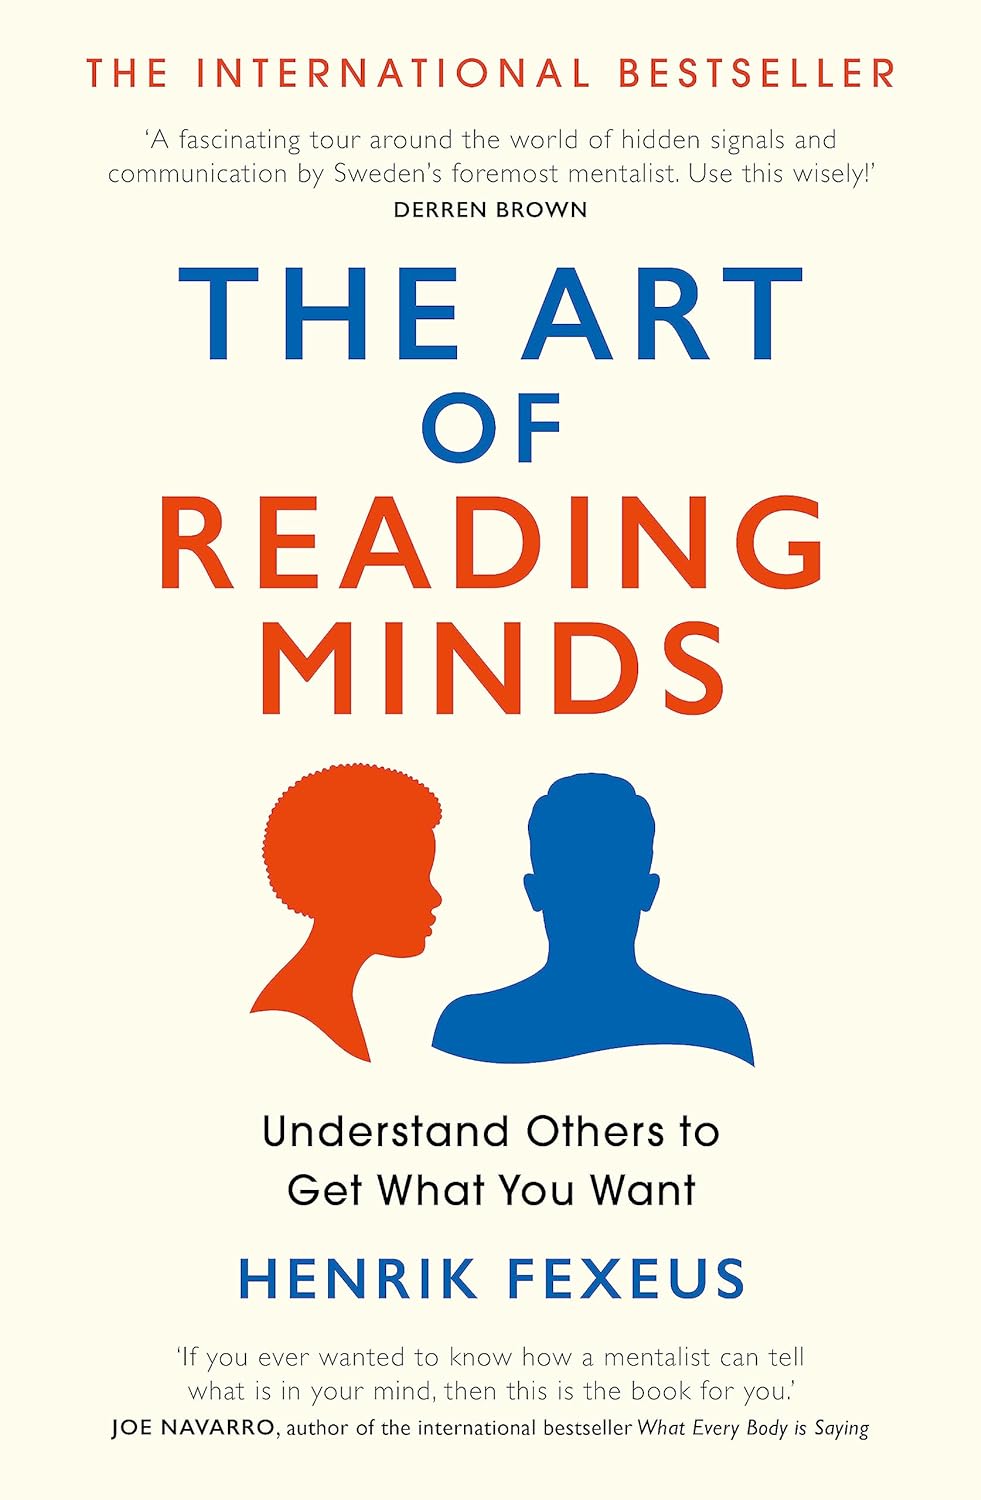 Art of Reading Minds by Henrik Fexeus